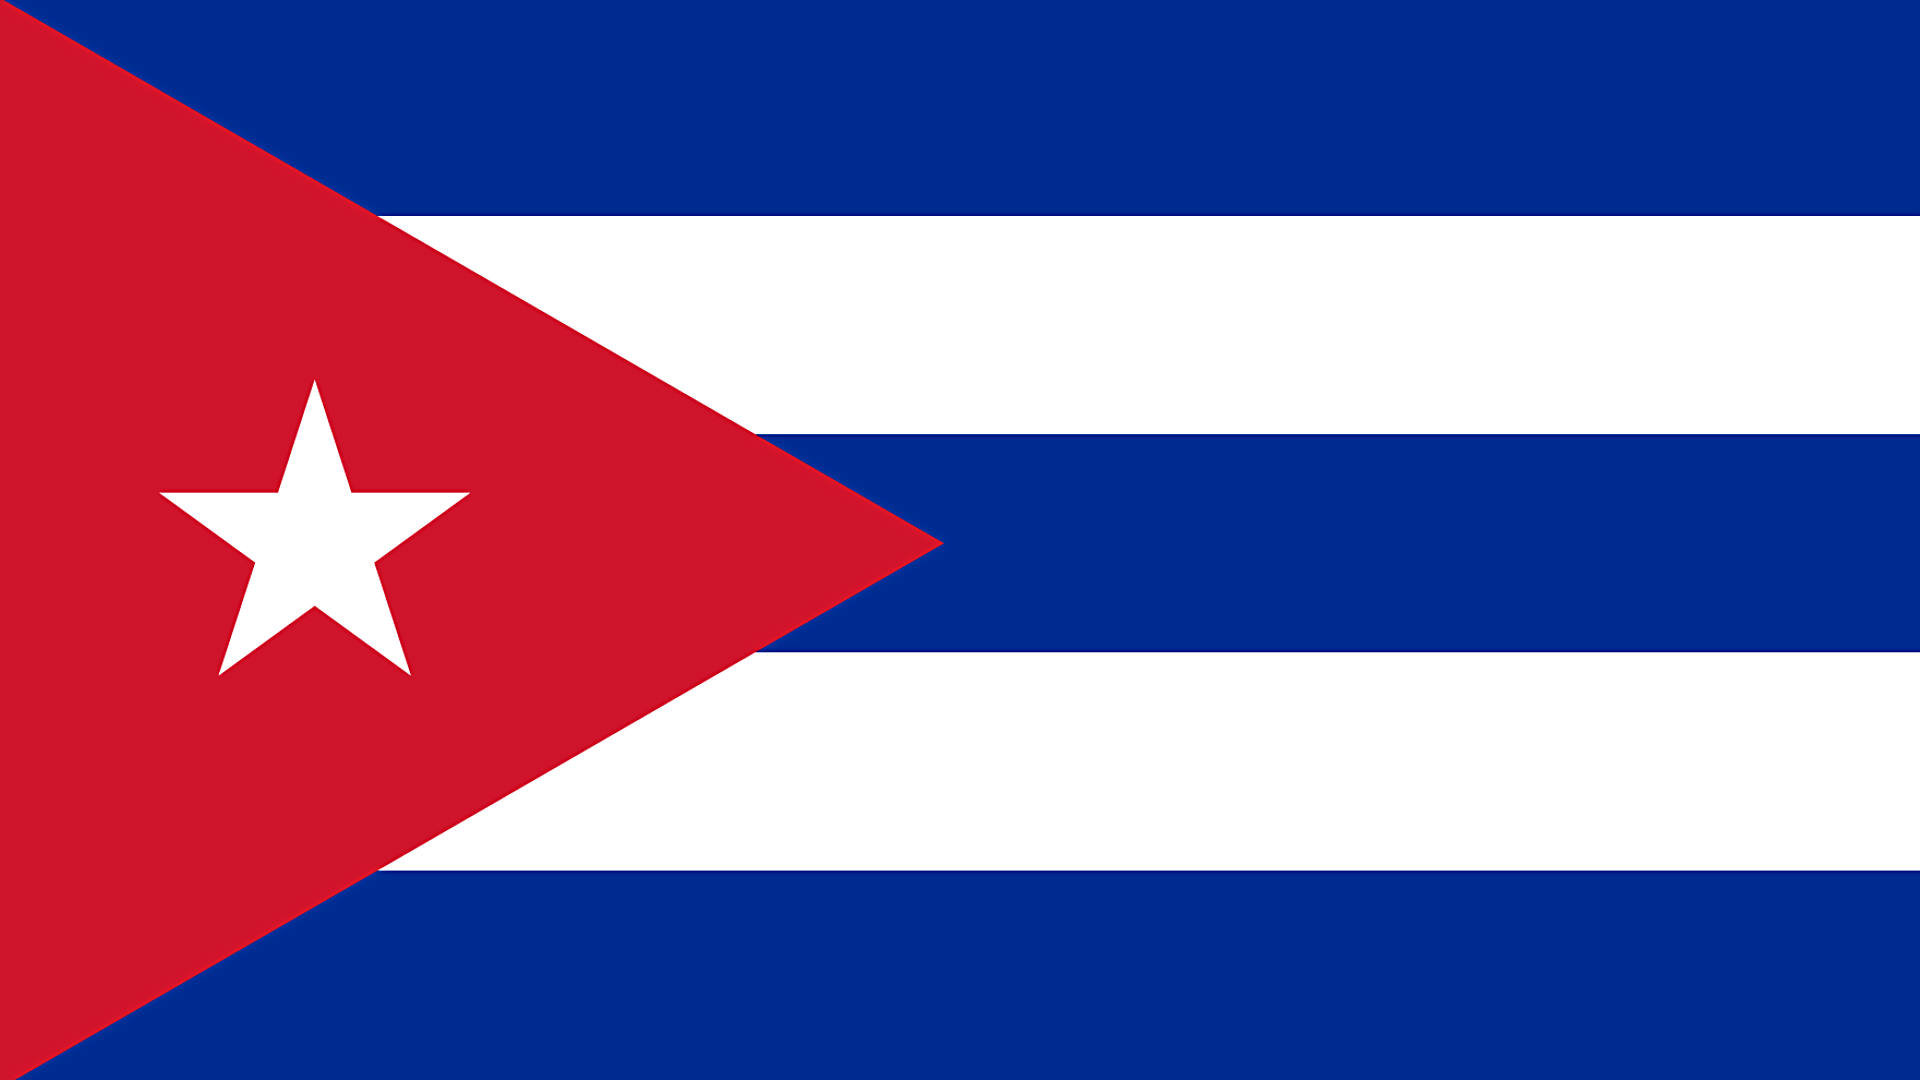 cuban-flag-ftrjpg_jcgwjsn36f4w13yufqmoss65z.jpg